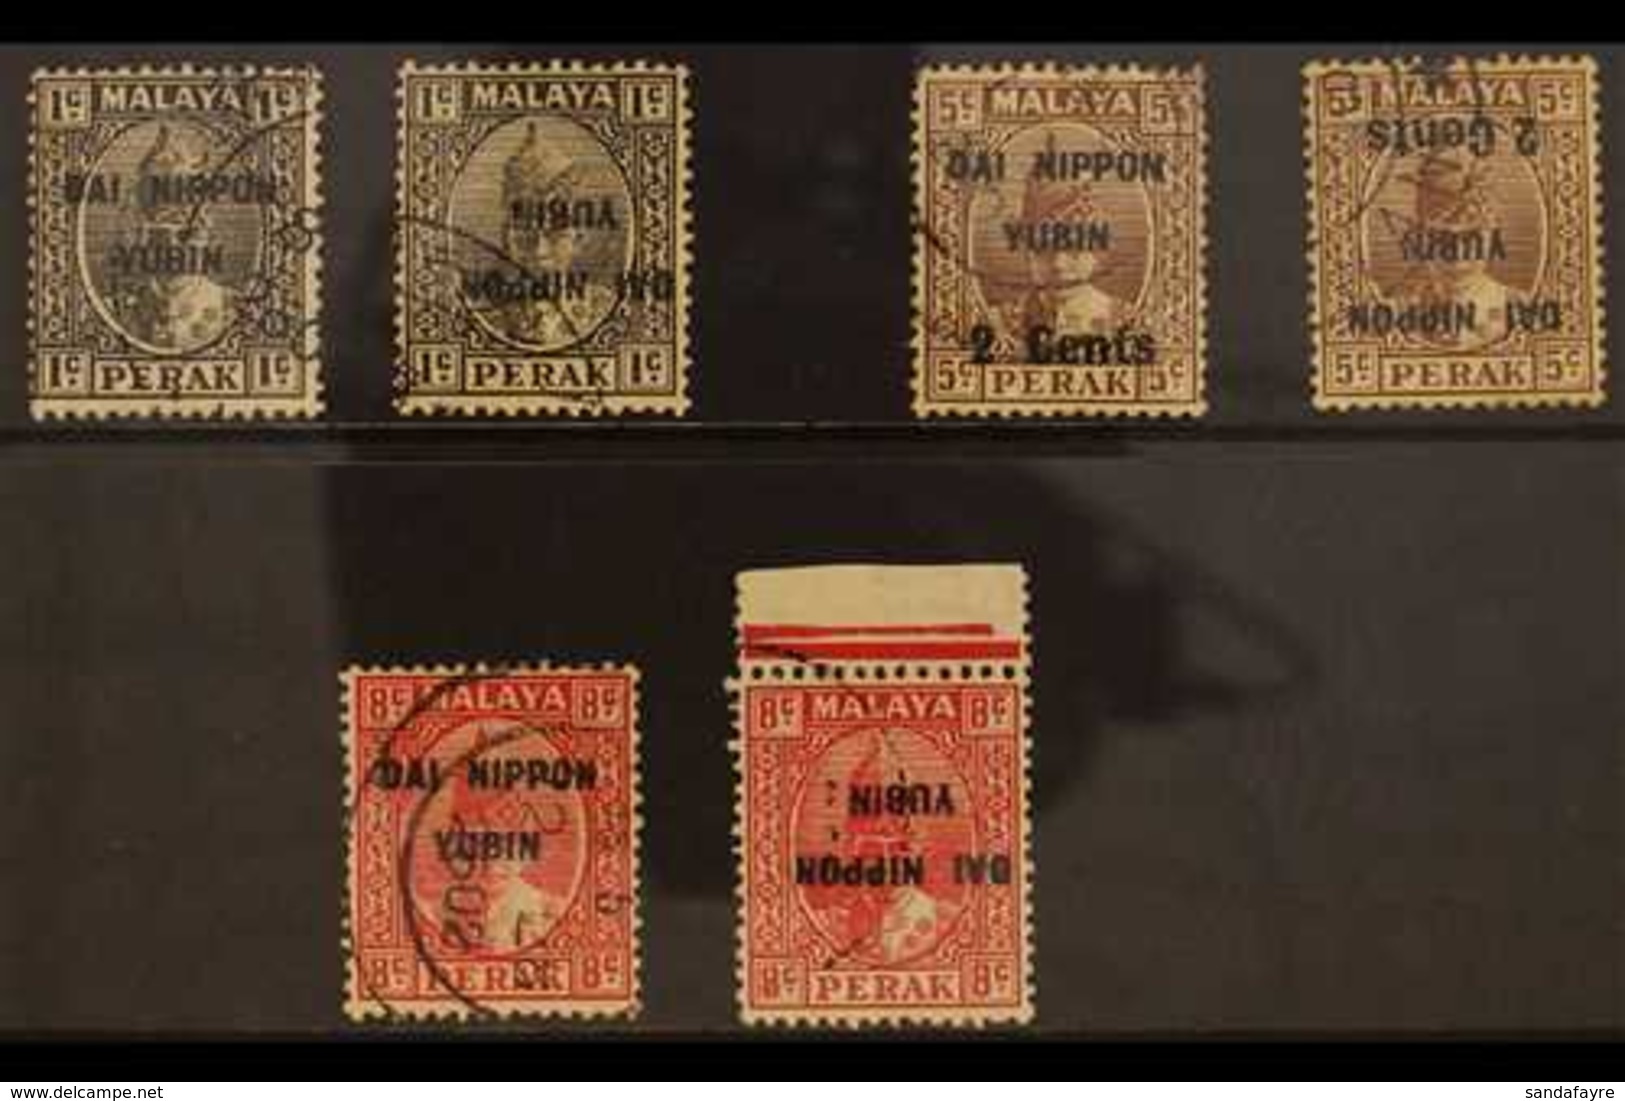 GENERAL ISSUES 1942 (Nov) Perak Stamps With "DAI NIPPON YUBIN" Overprints - The Set With Normal Overprints (SG J260/62), - Autres & Non Classés